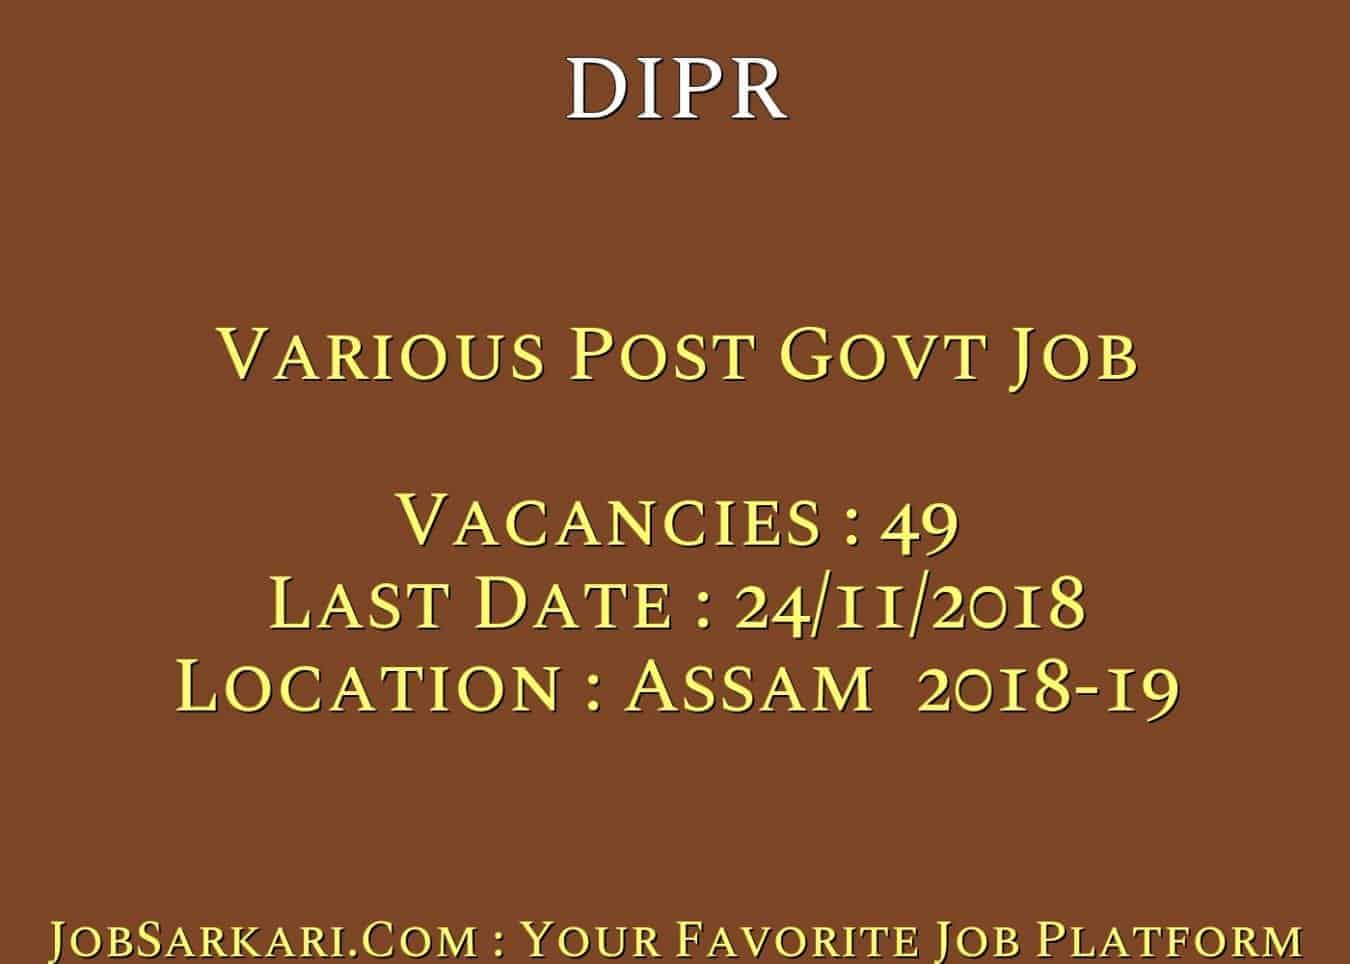 DIPR Recruitment 2018 For Various Post Govt Job